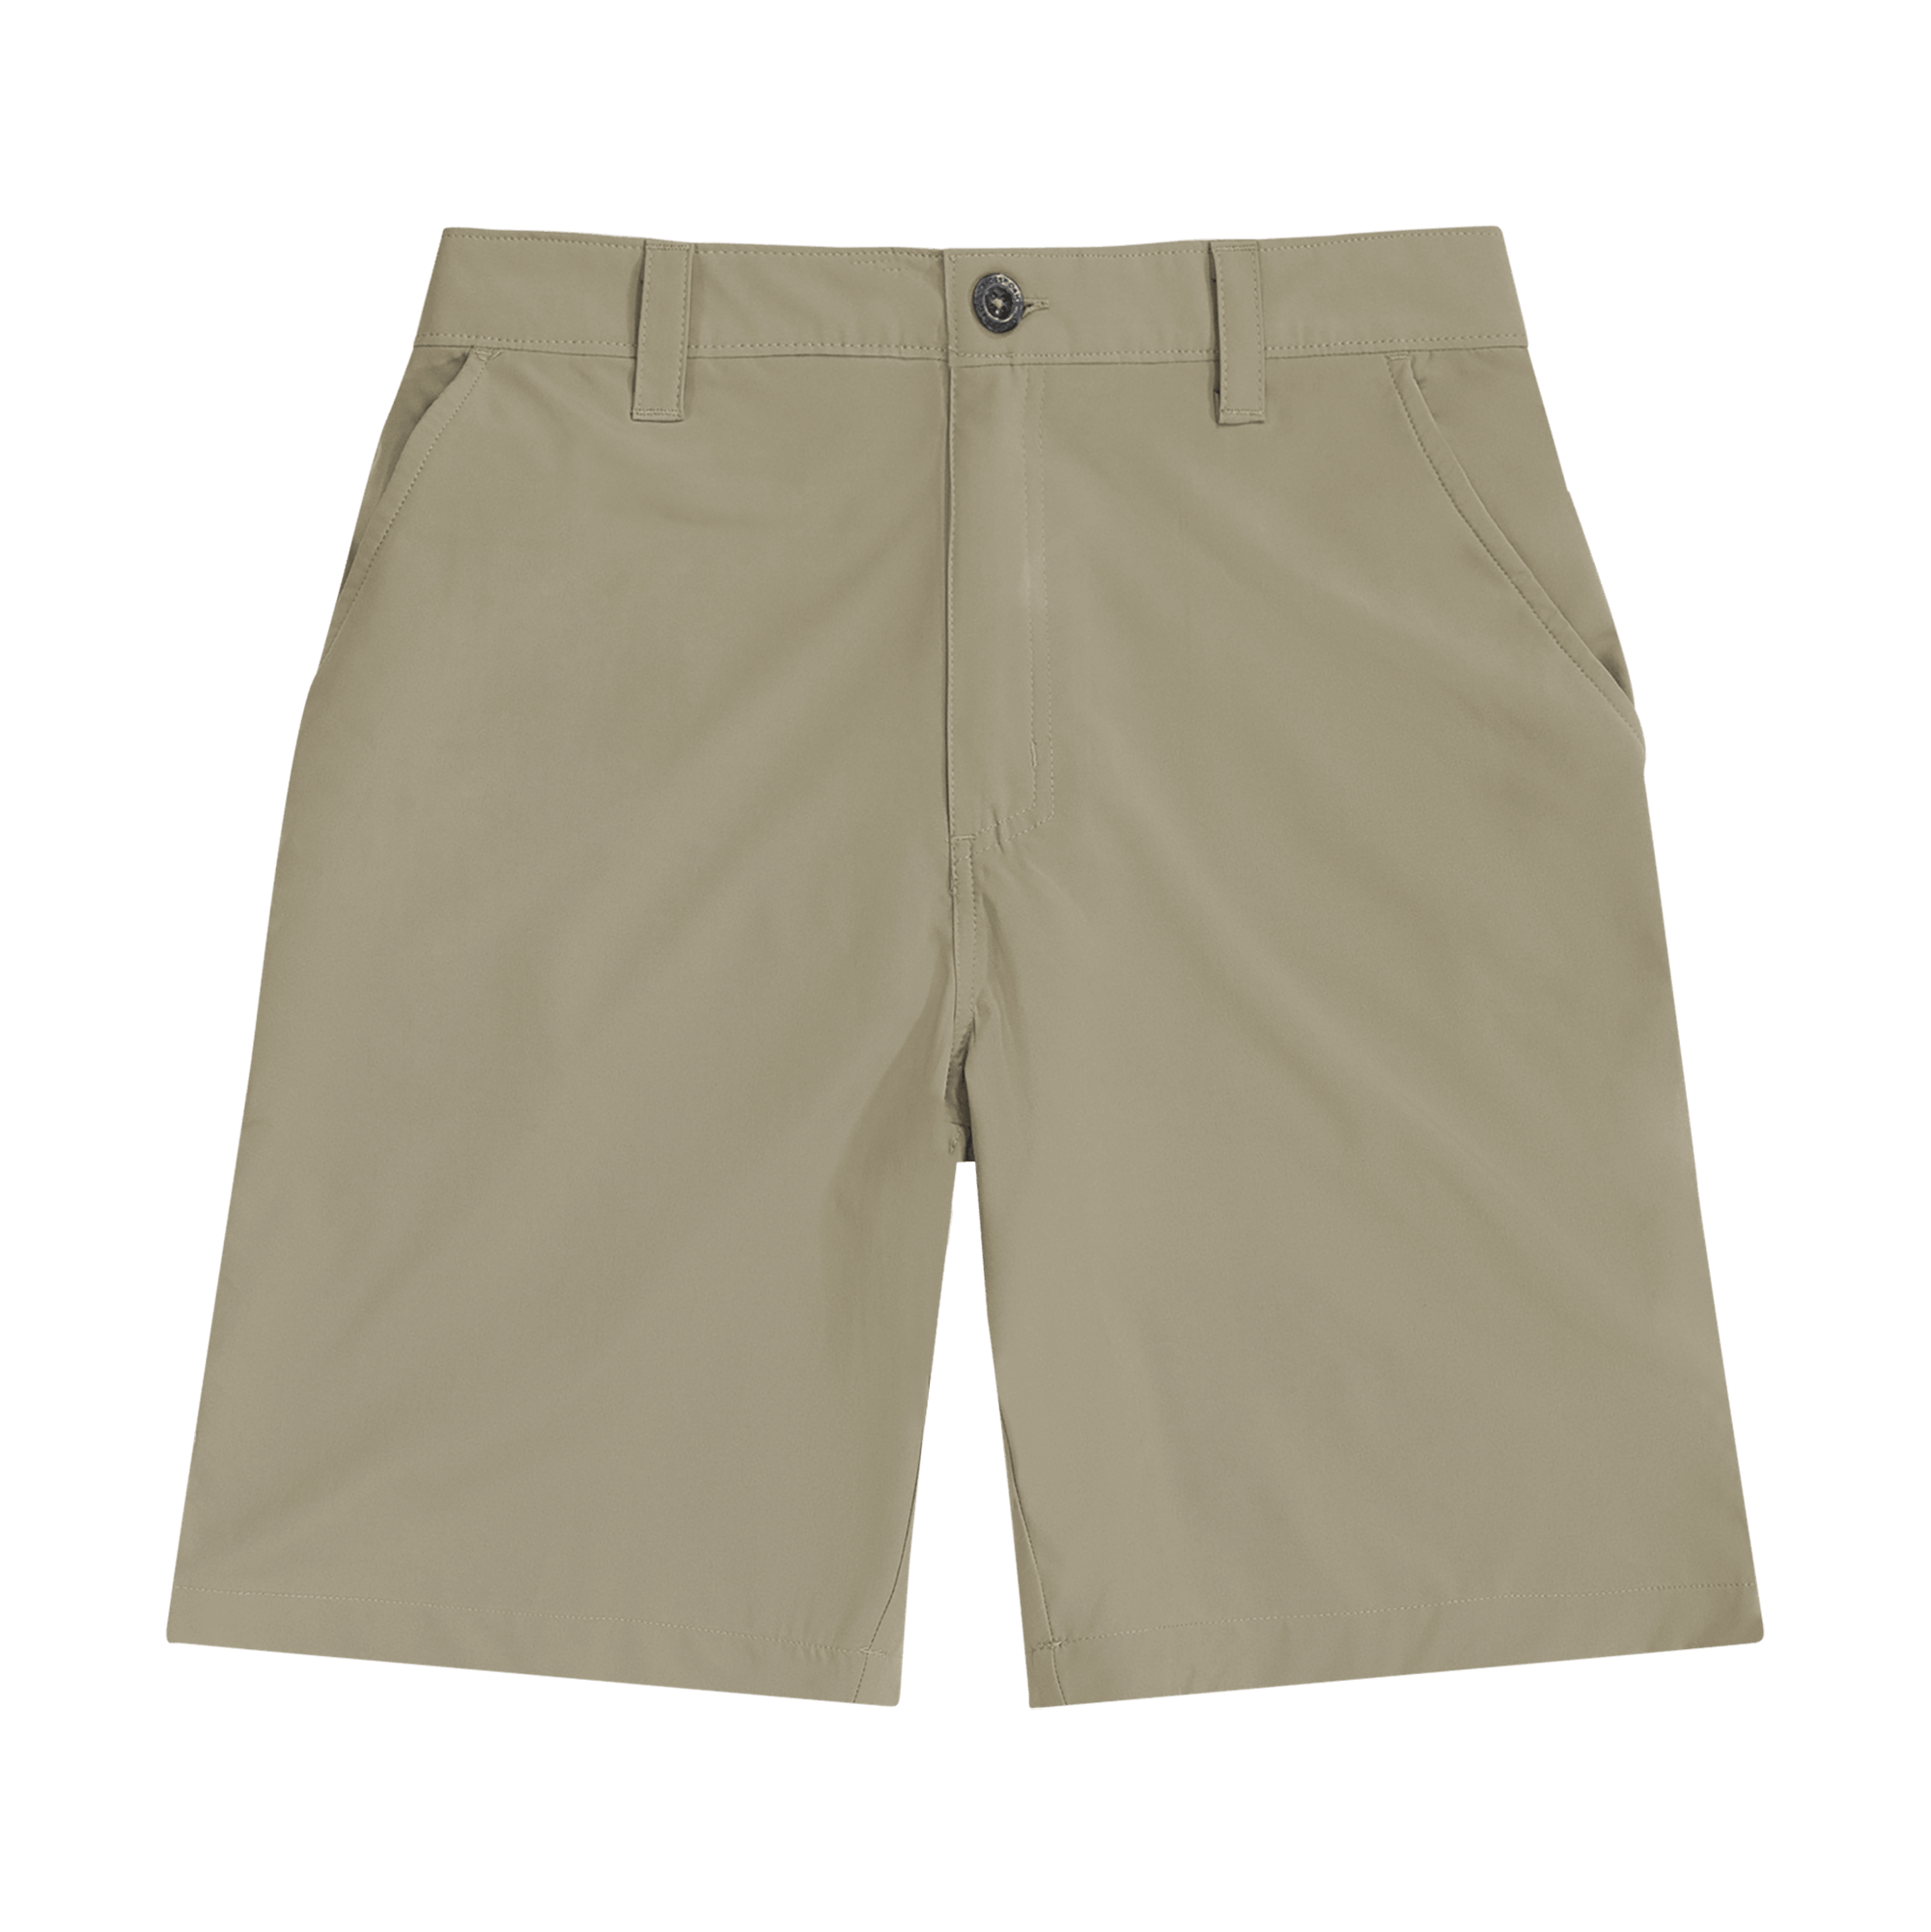 Shorts – The Mossy Oak Store